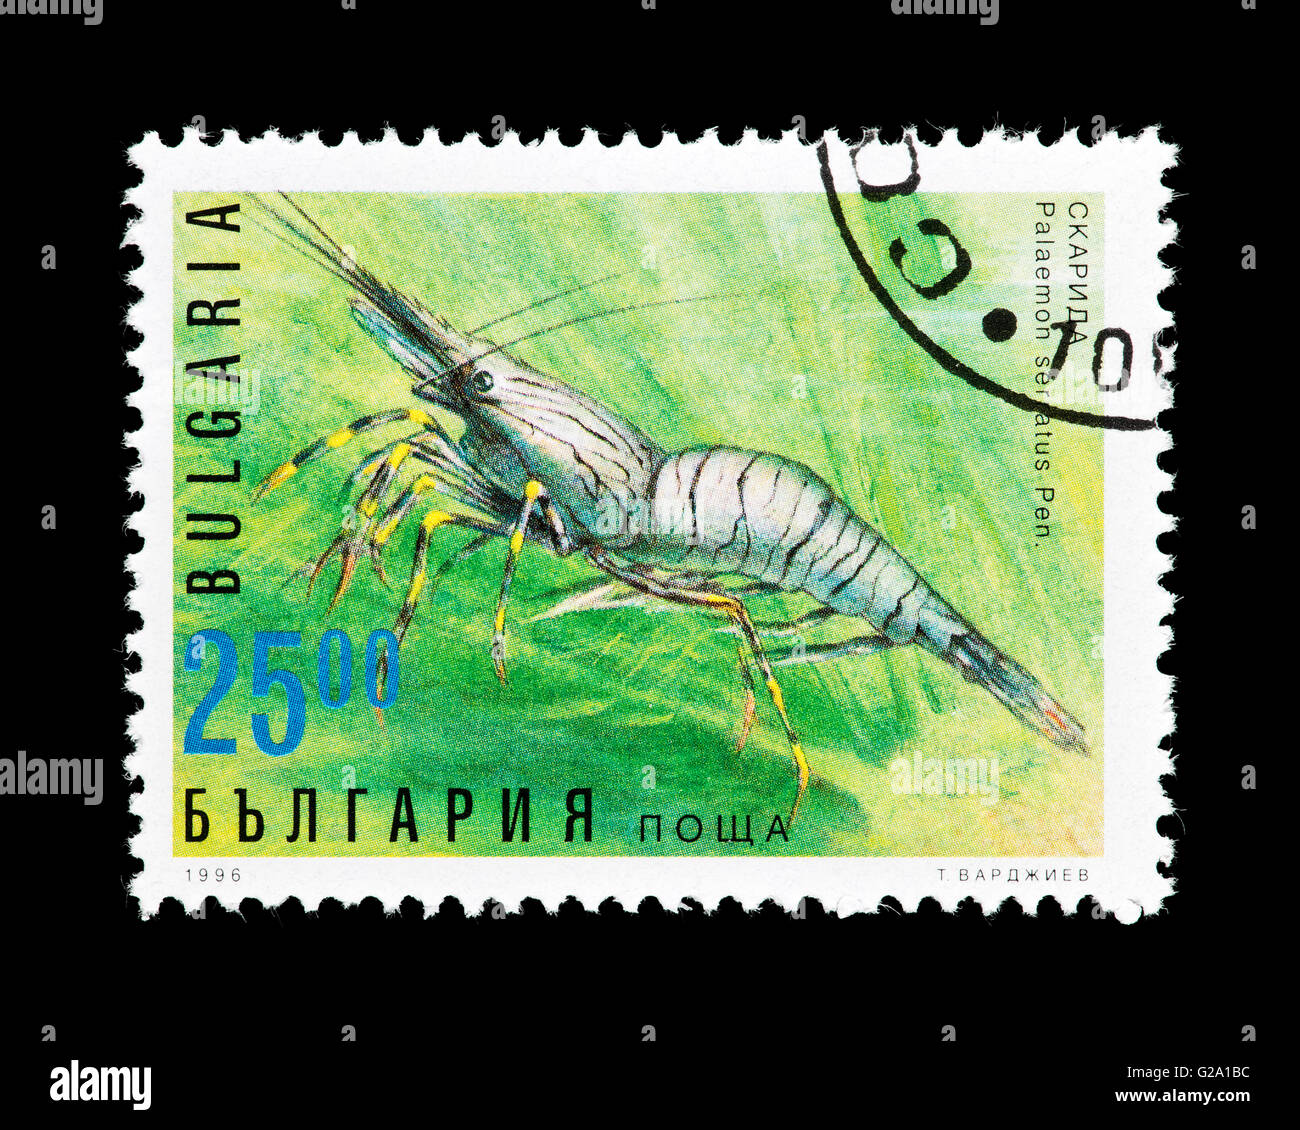 Postage stamp from Bulgaria depicting a common prawn  (Palaemon serratus) Stock Photo